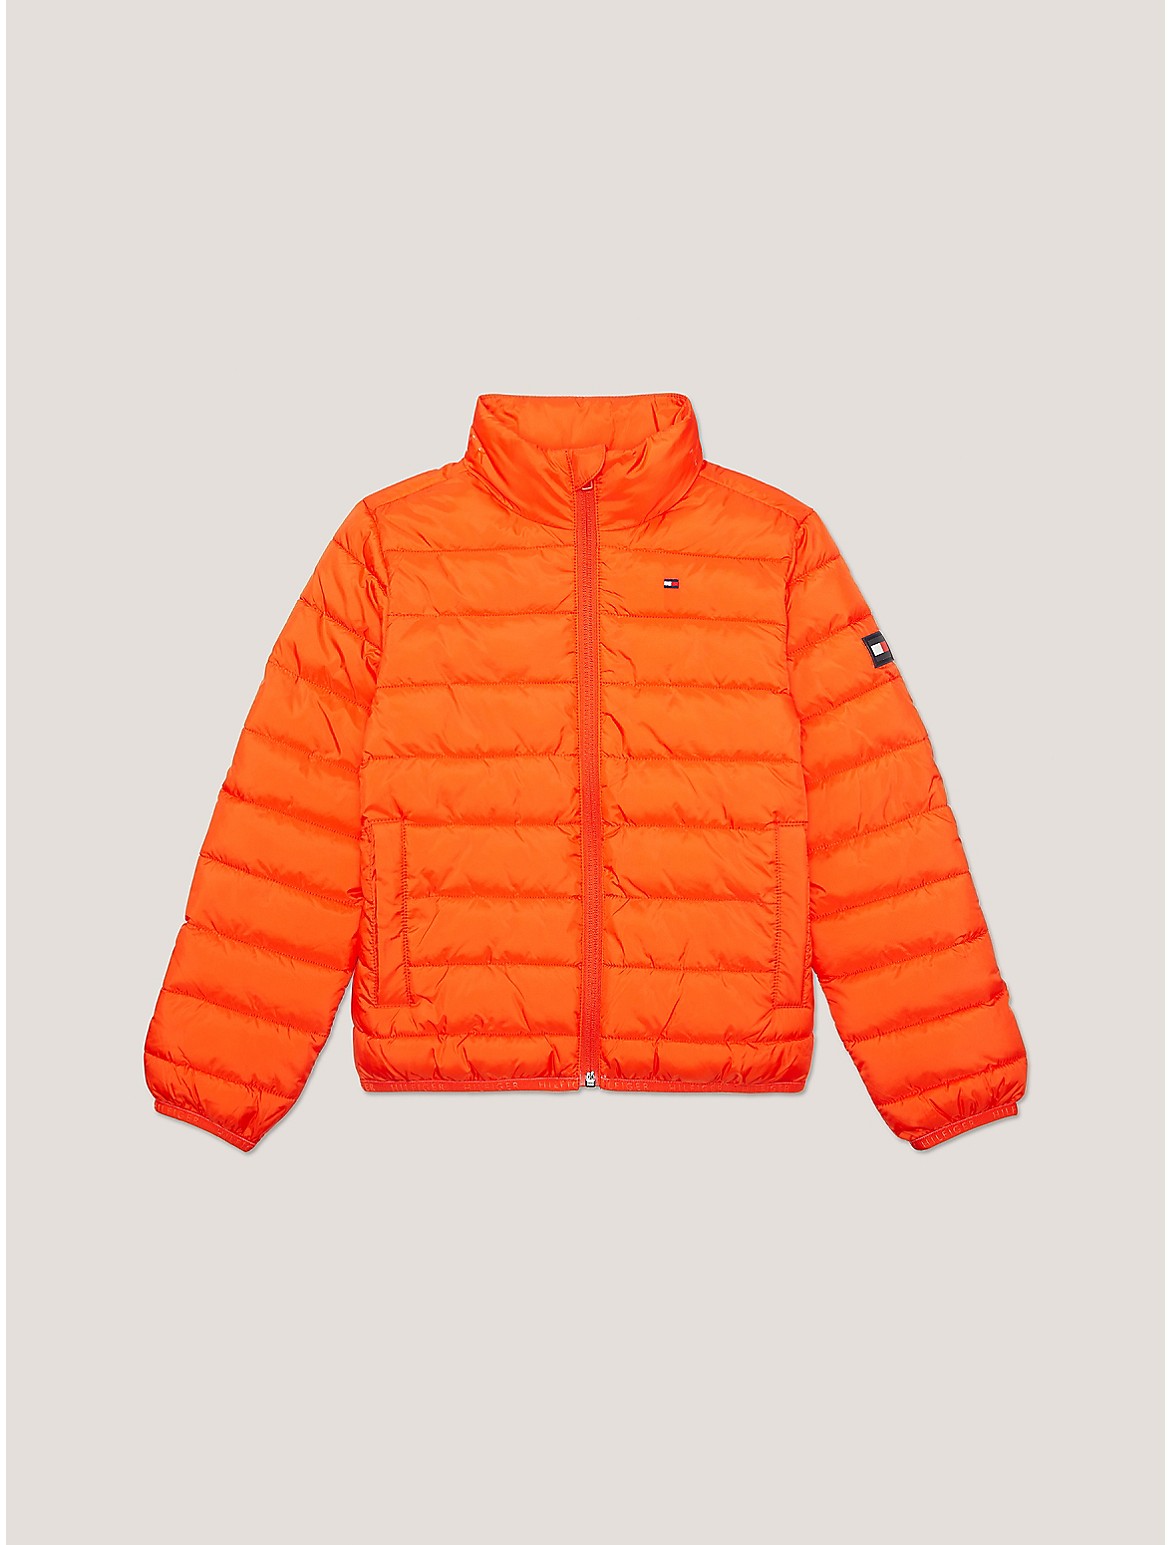 Tommy Hilfiger Boys' Kids' Insulated Jacket - Orange - L